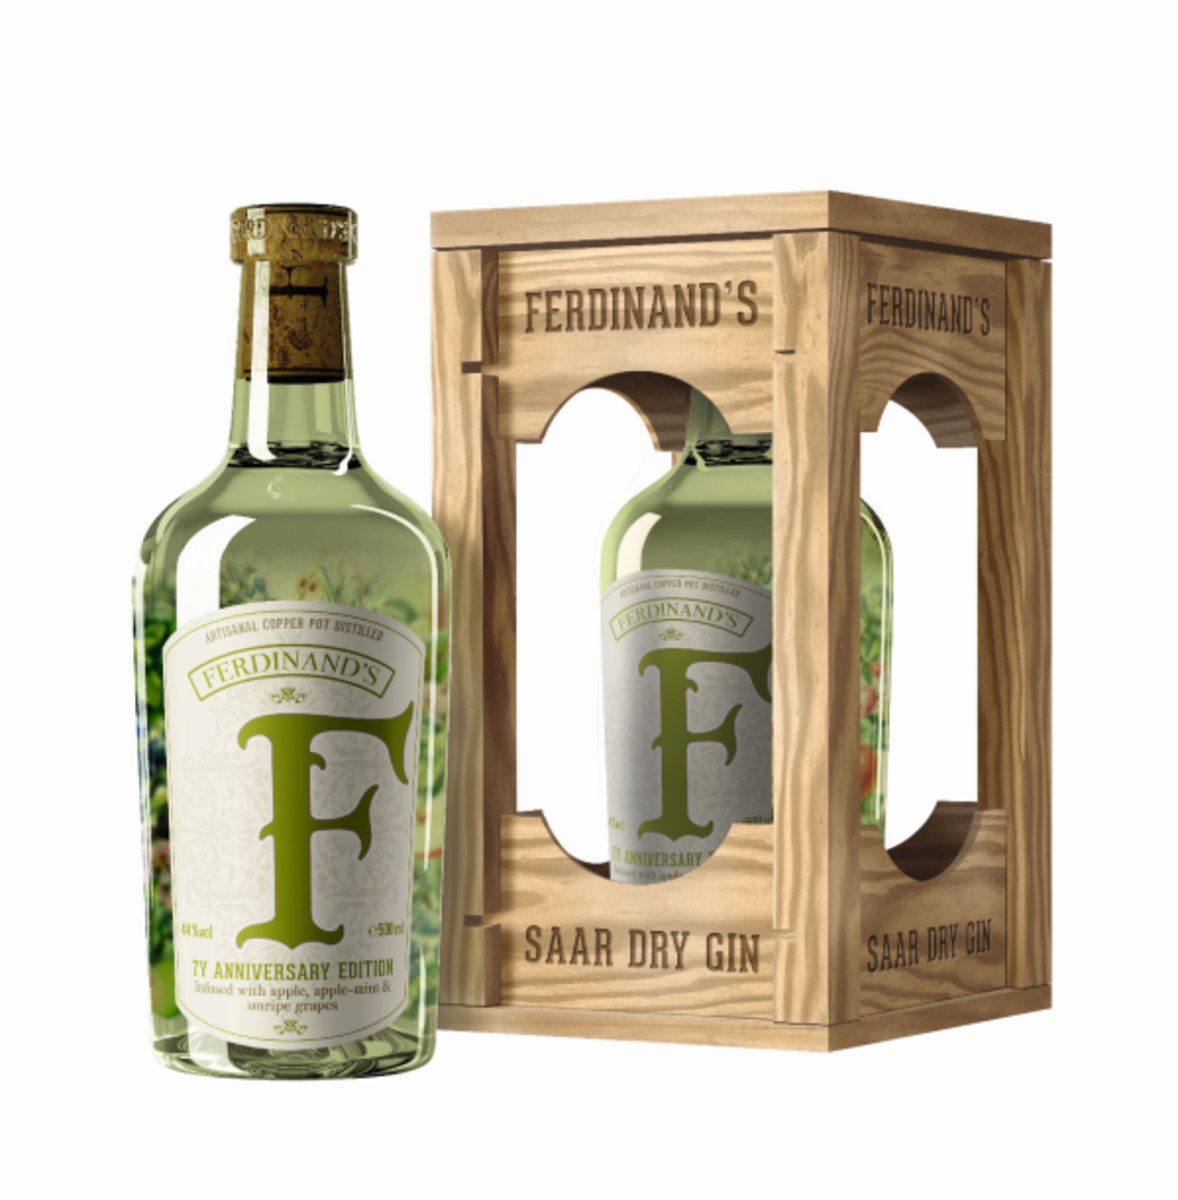 Ferdinand’s Saar Dry Gin feiert siebenjähriges Jubiläum mit limitierter Sammler-Edition